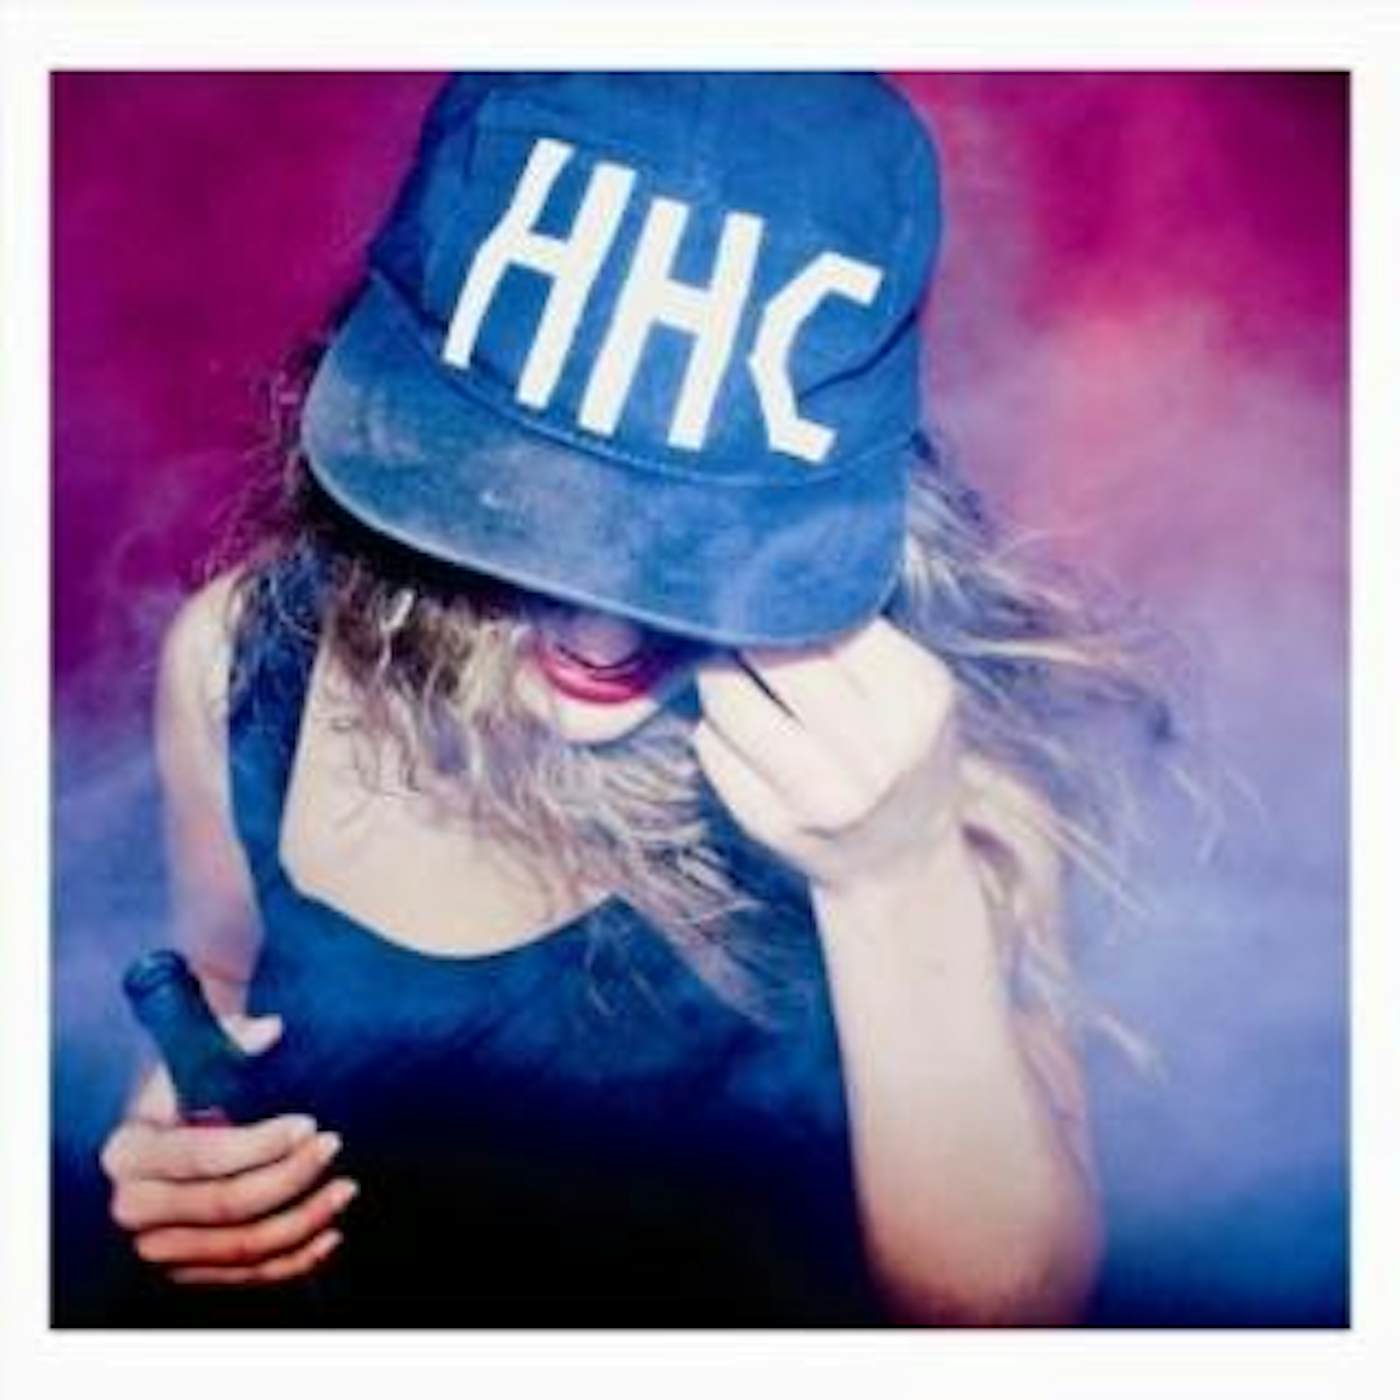 HAPPY HANDS CLUB Vinyl Record - Portugal Release